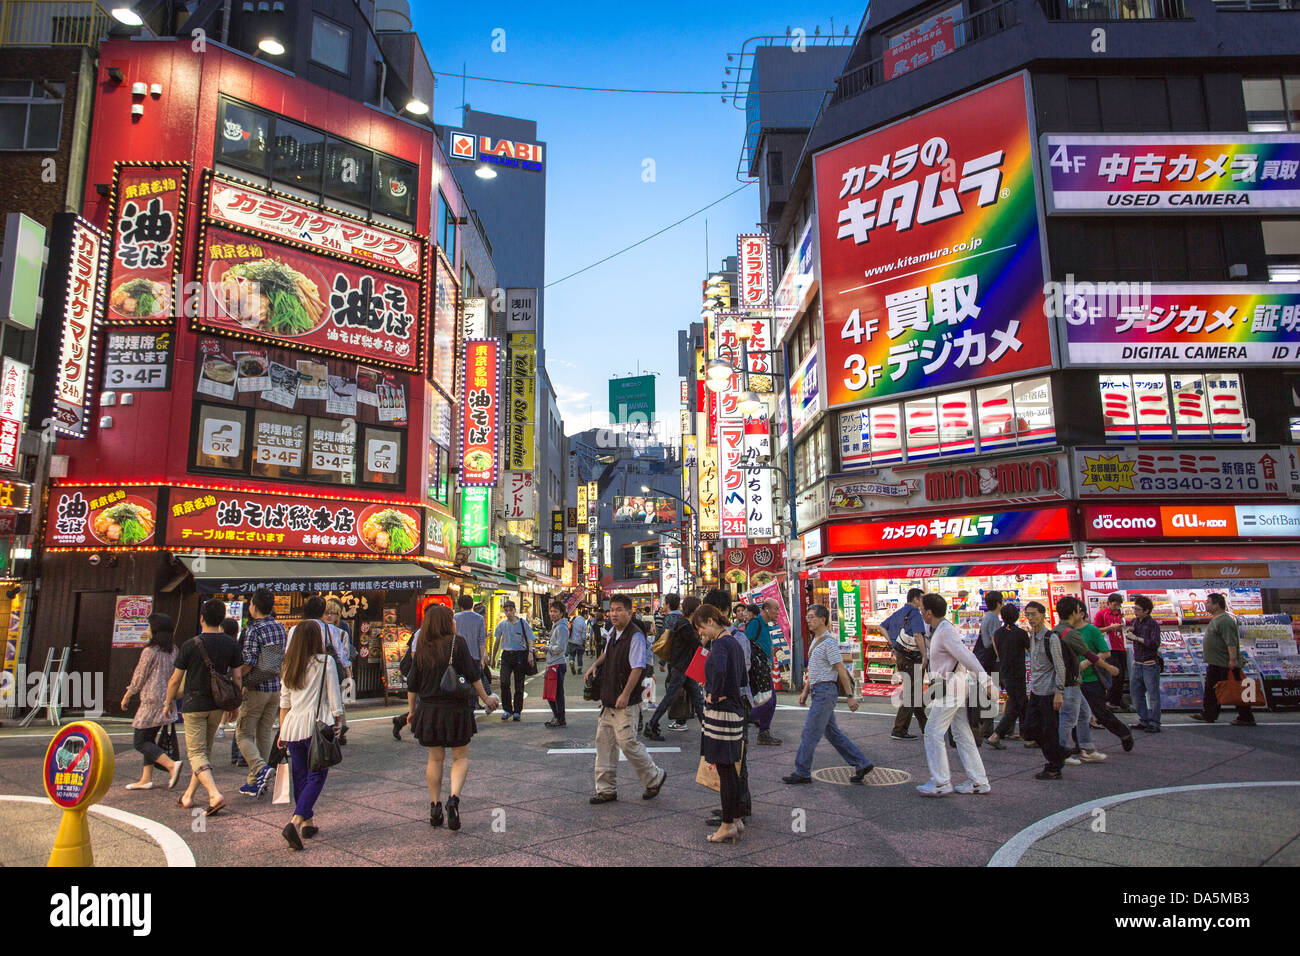 Japan, Asia, Tokyo, City, Shinjuku, District, electric town, Yodobashi, electronics, shop, activity, colourful, display, electri Stock Photo